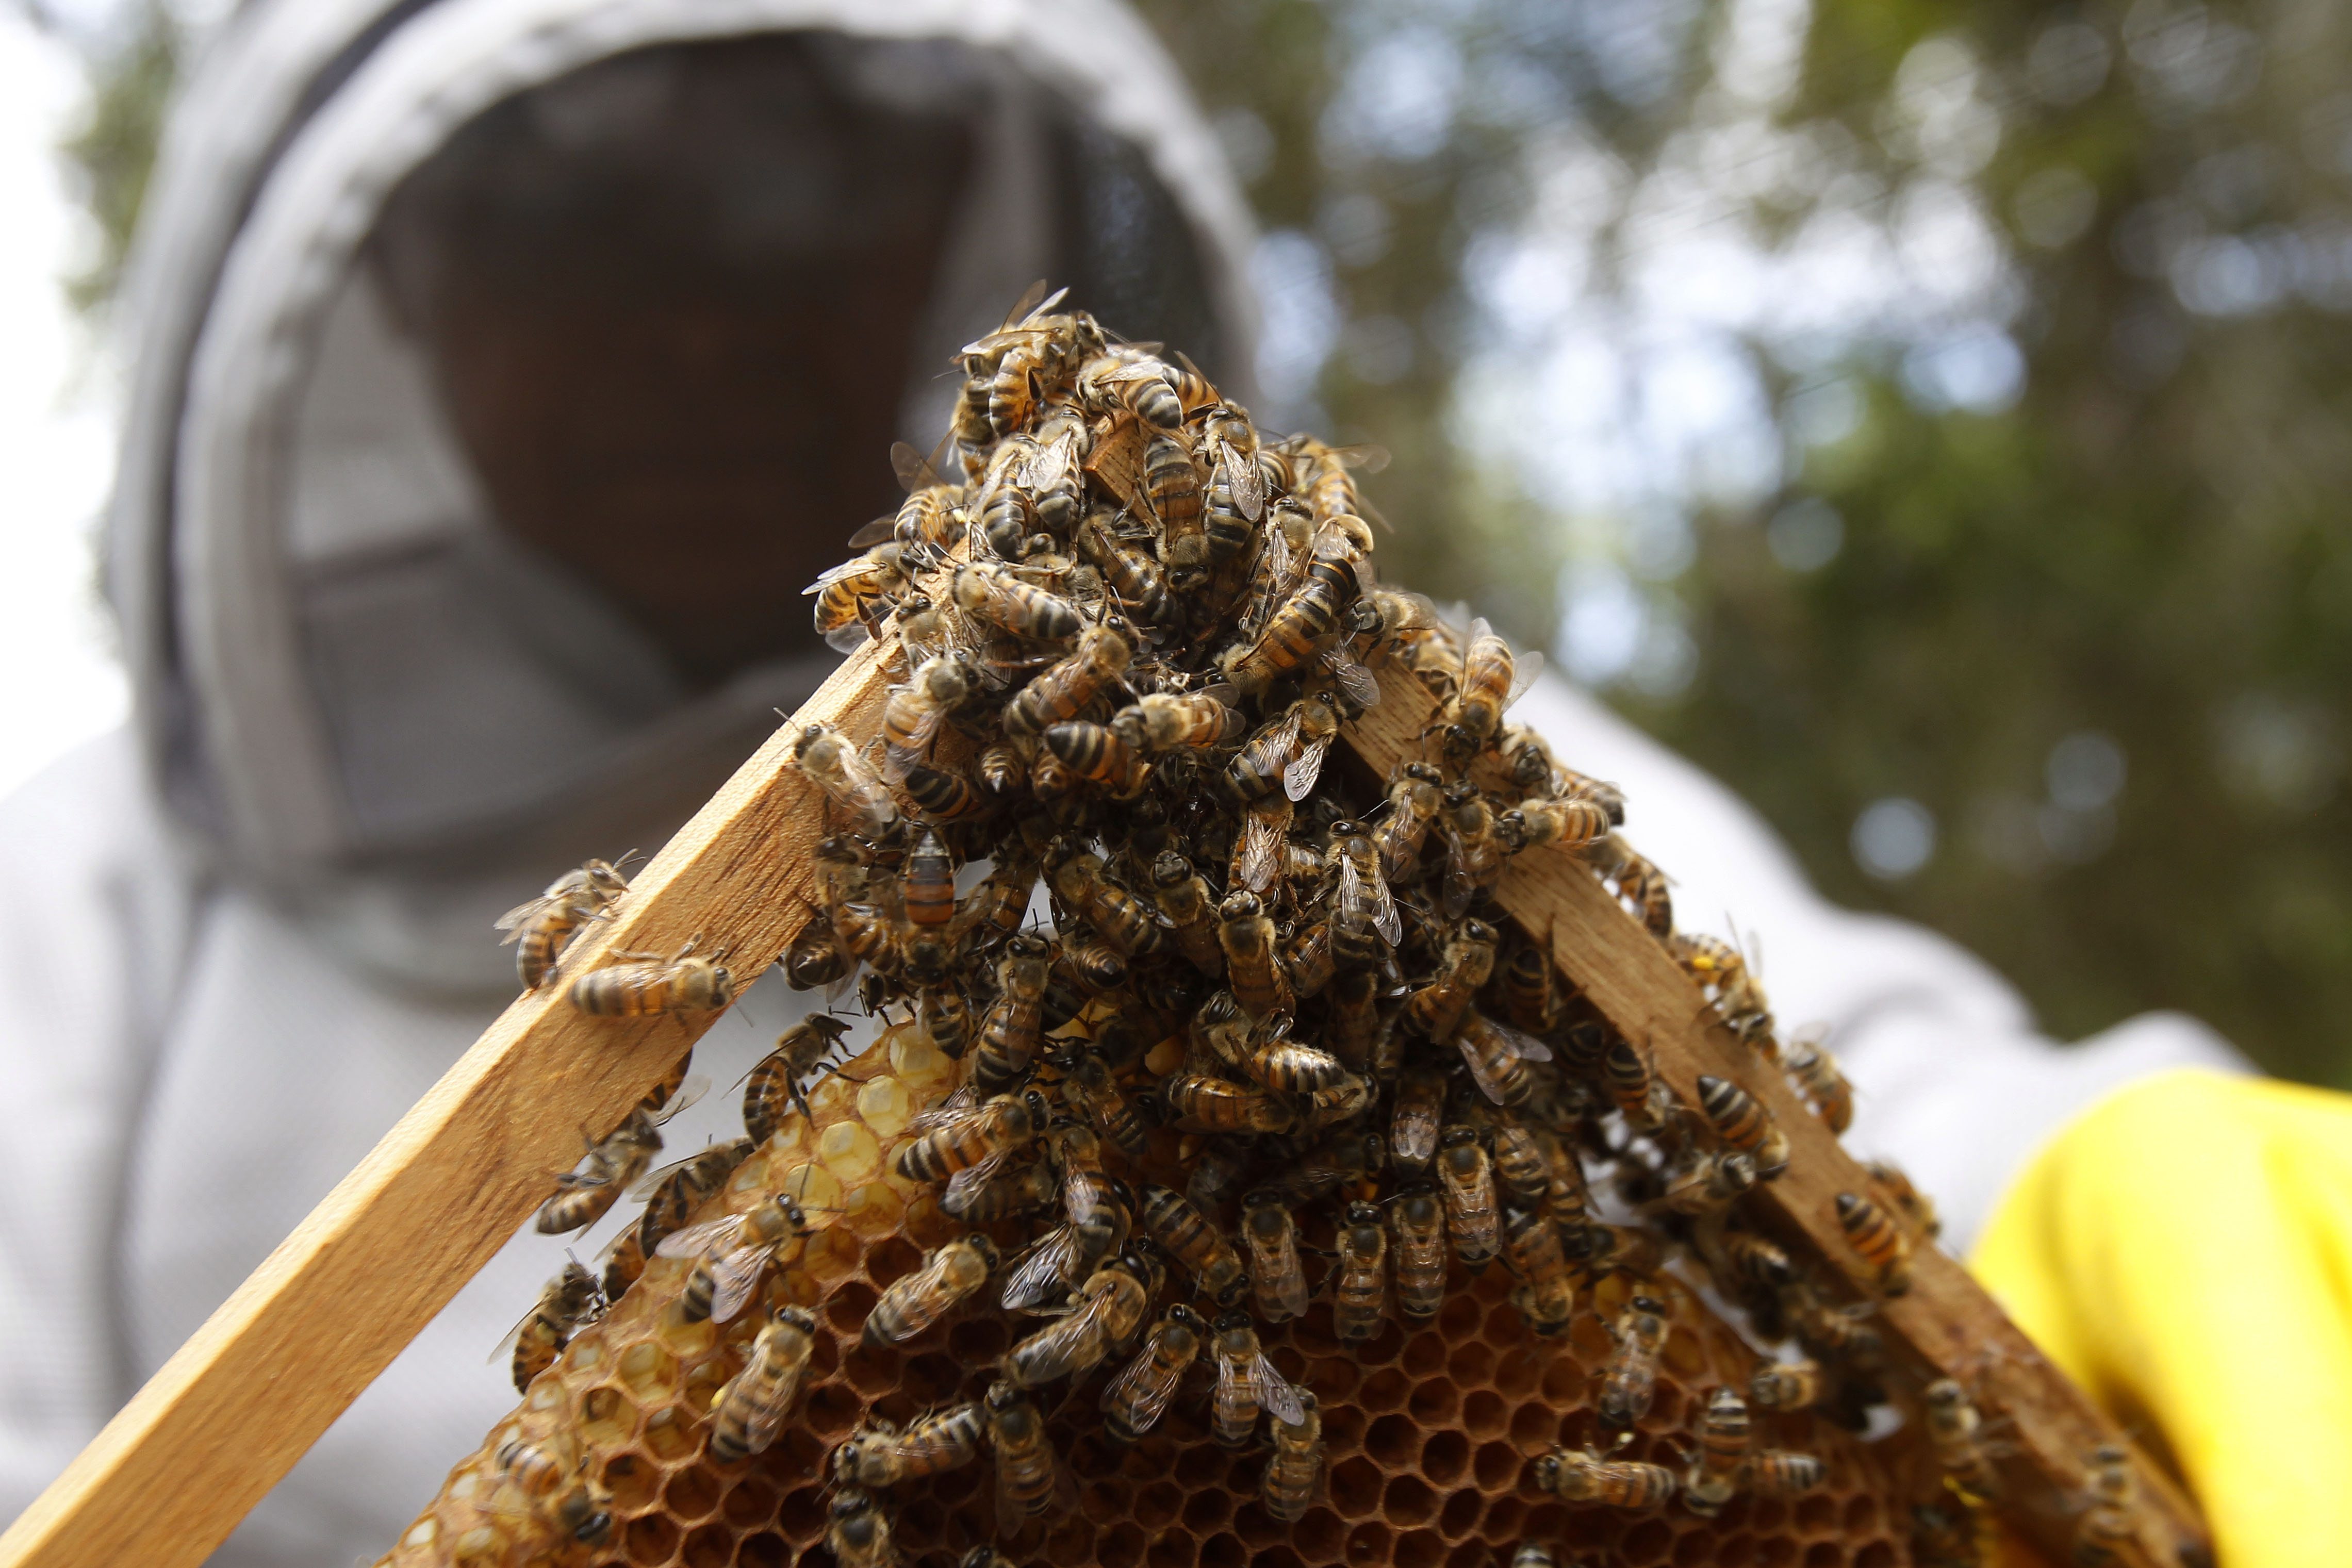  Un enjambre de abejas africanas mató a siete personas en Nicaragua. (Foto Prensa Libre: EFE)